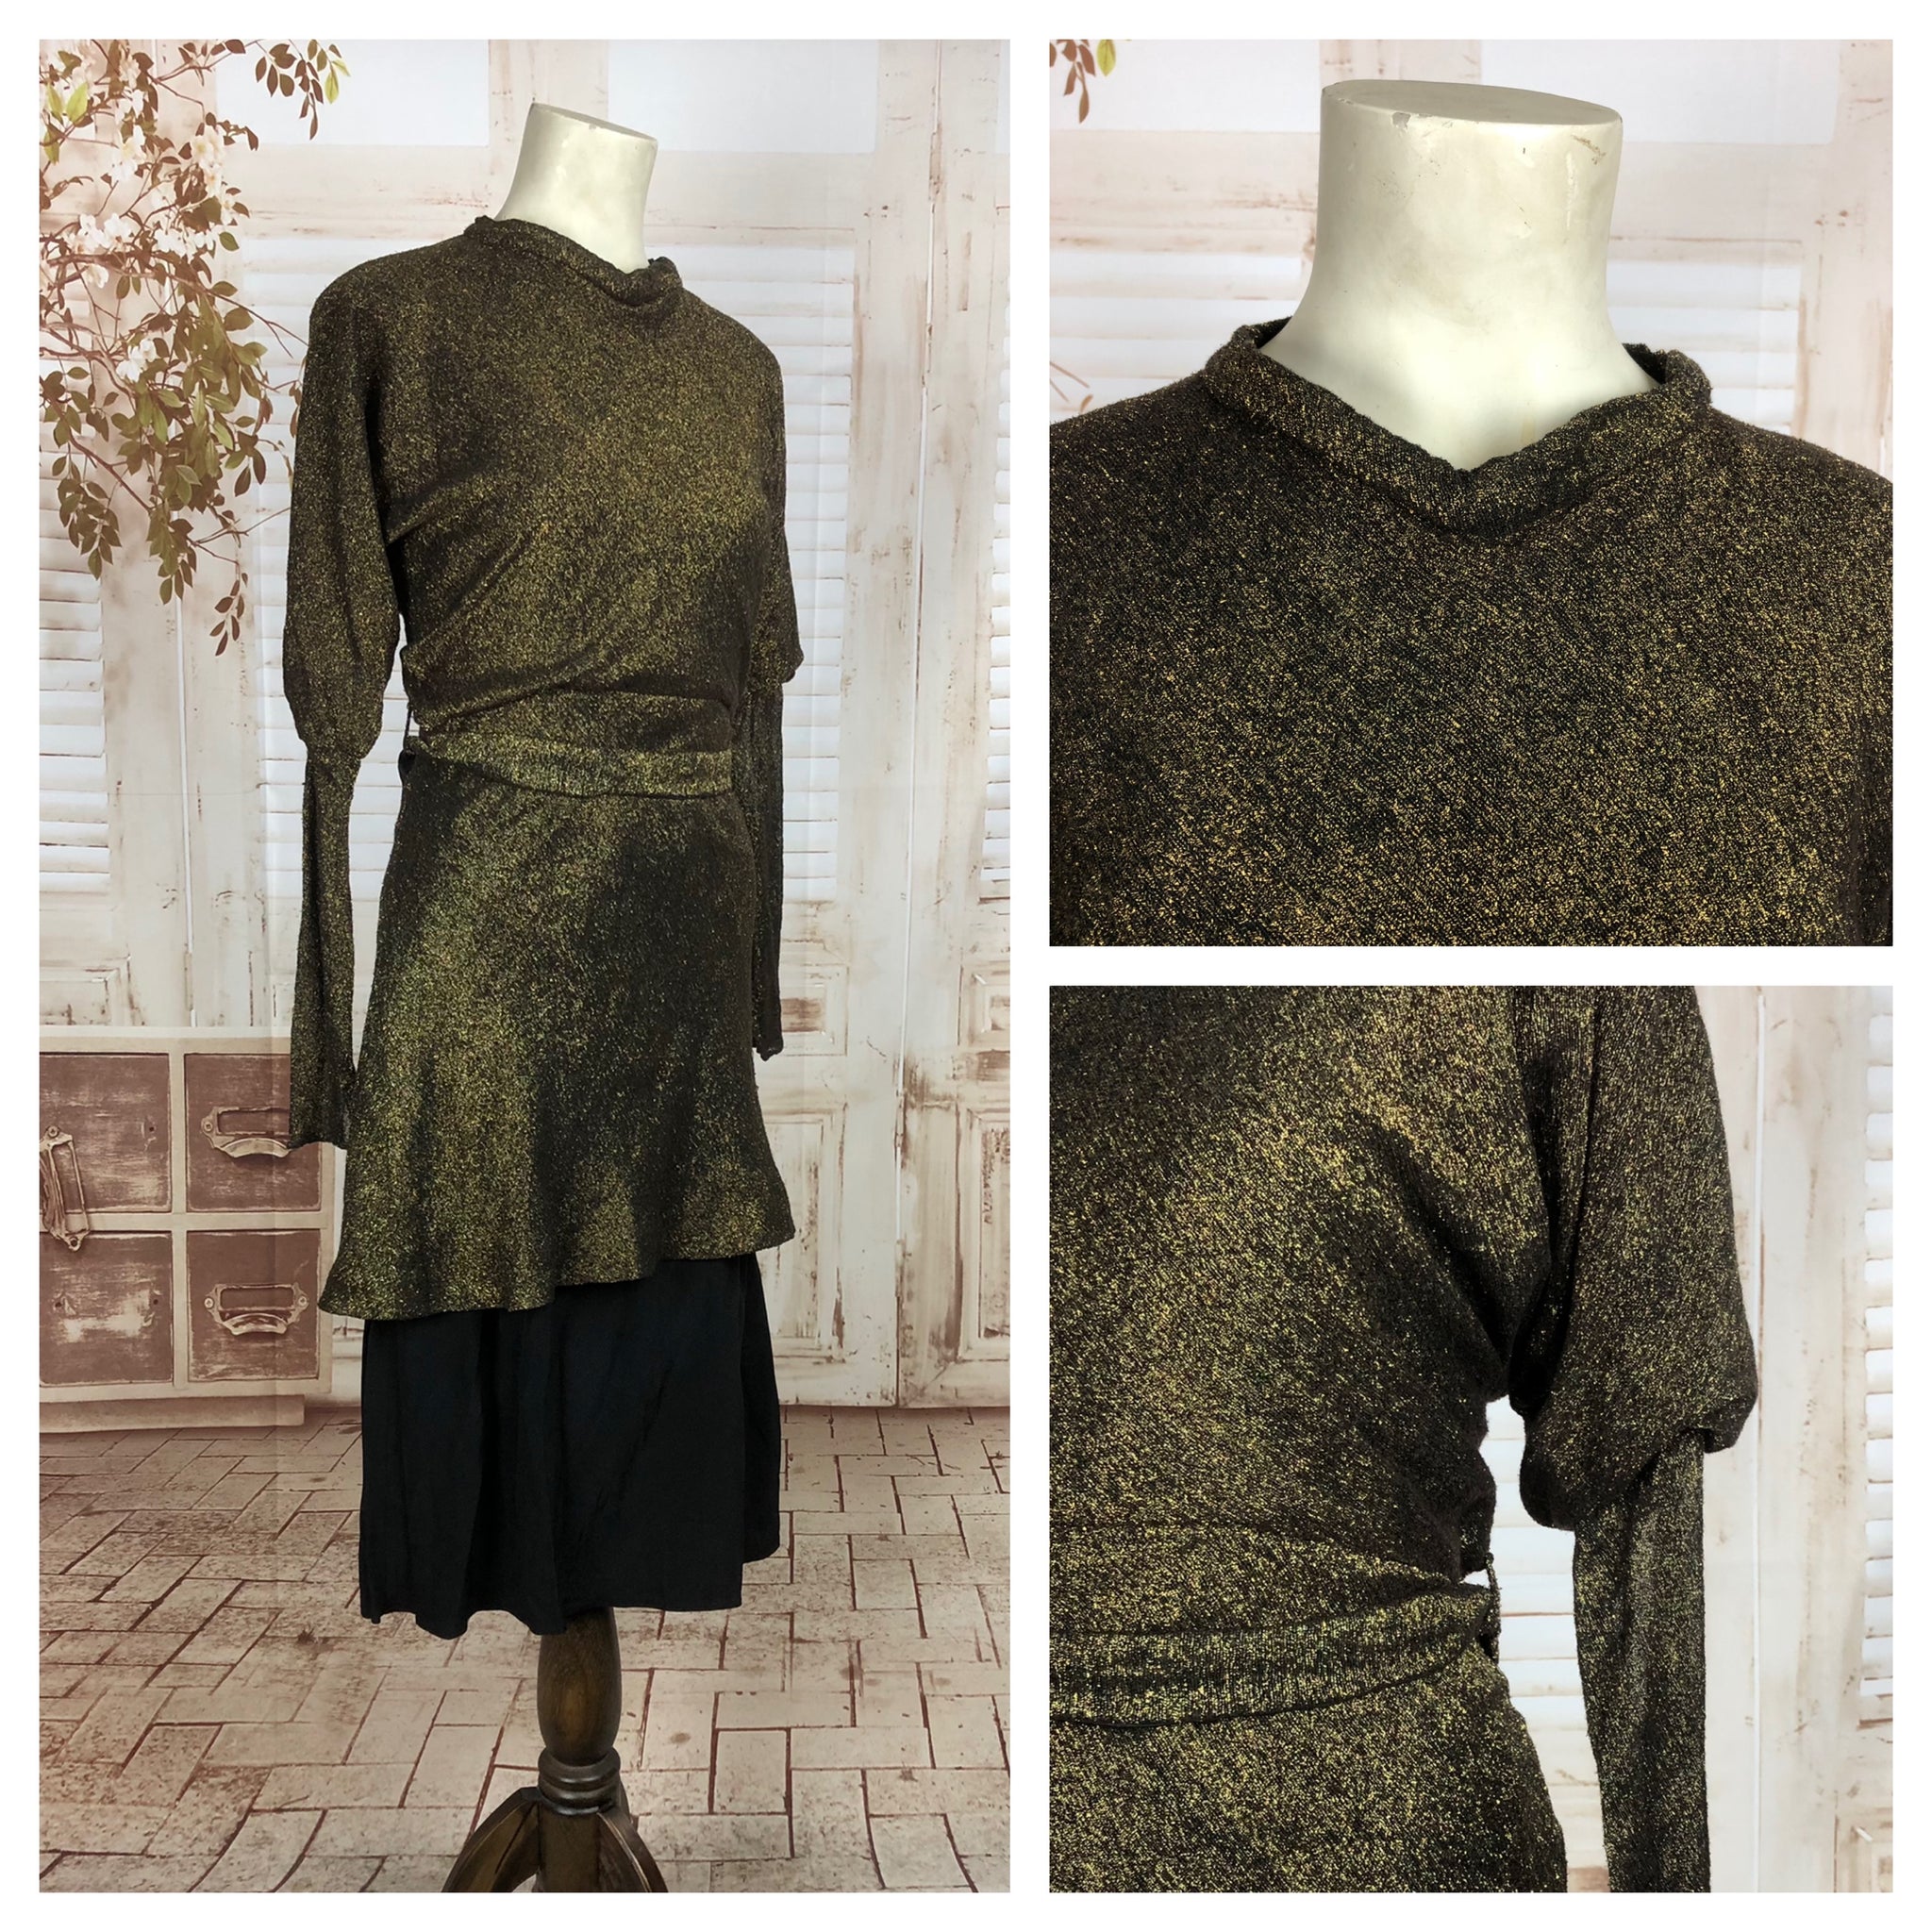 Original 1930s 30s Vintage Belted Lamé Thread Dress With Juliette Sleeve